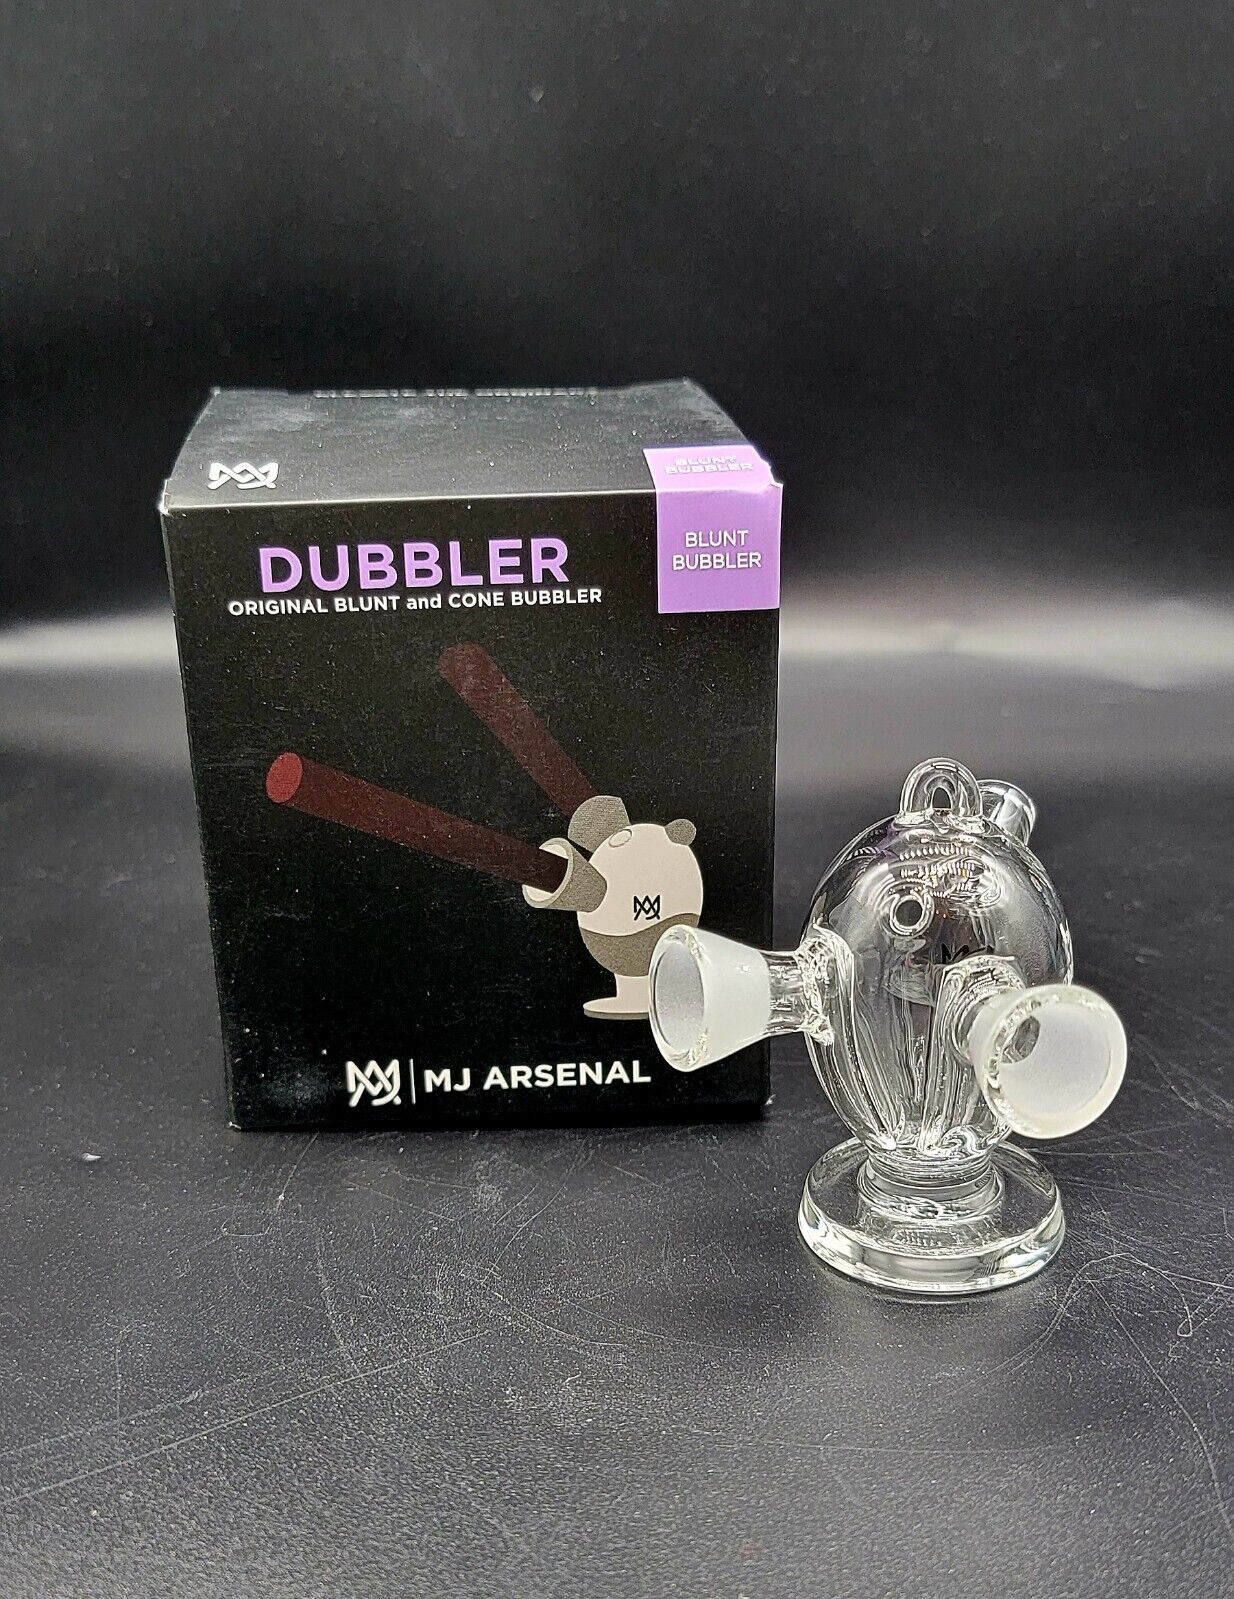 MJ Arsenal The Dubbler Bubbler